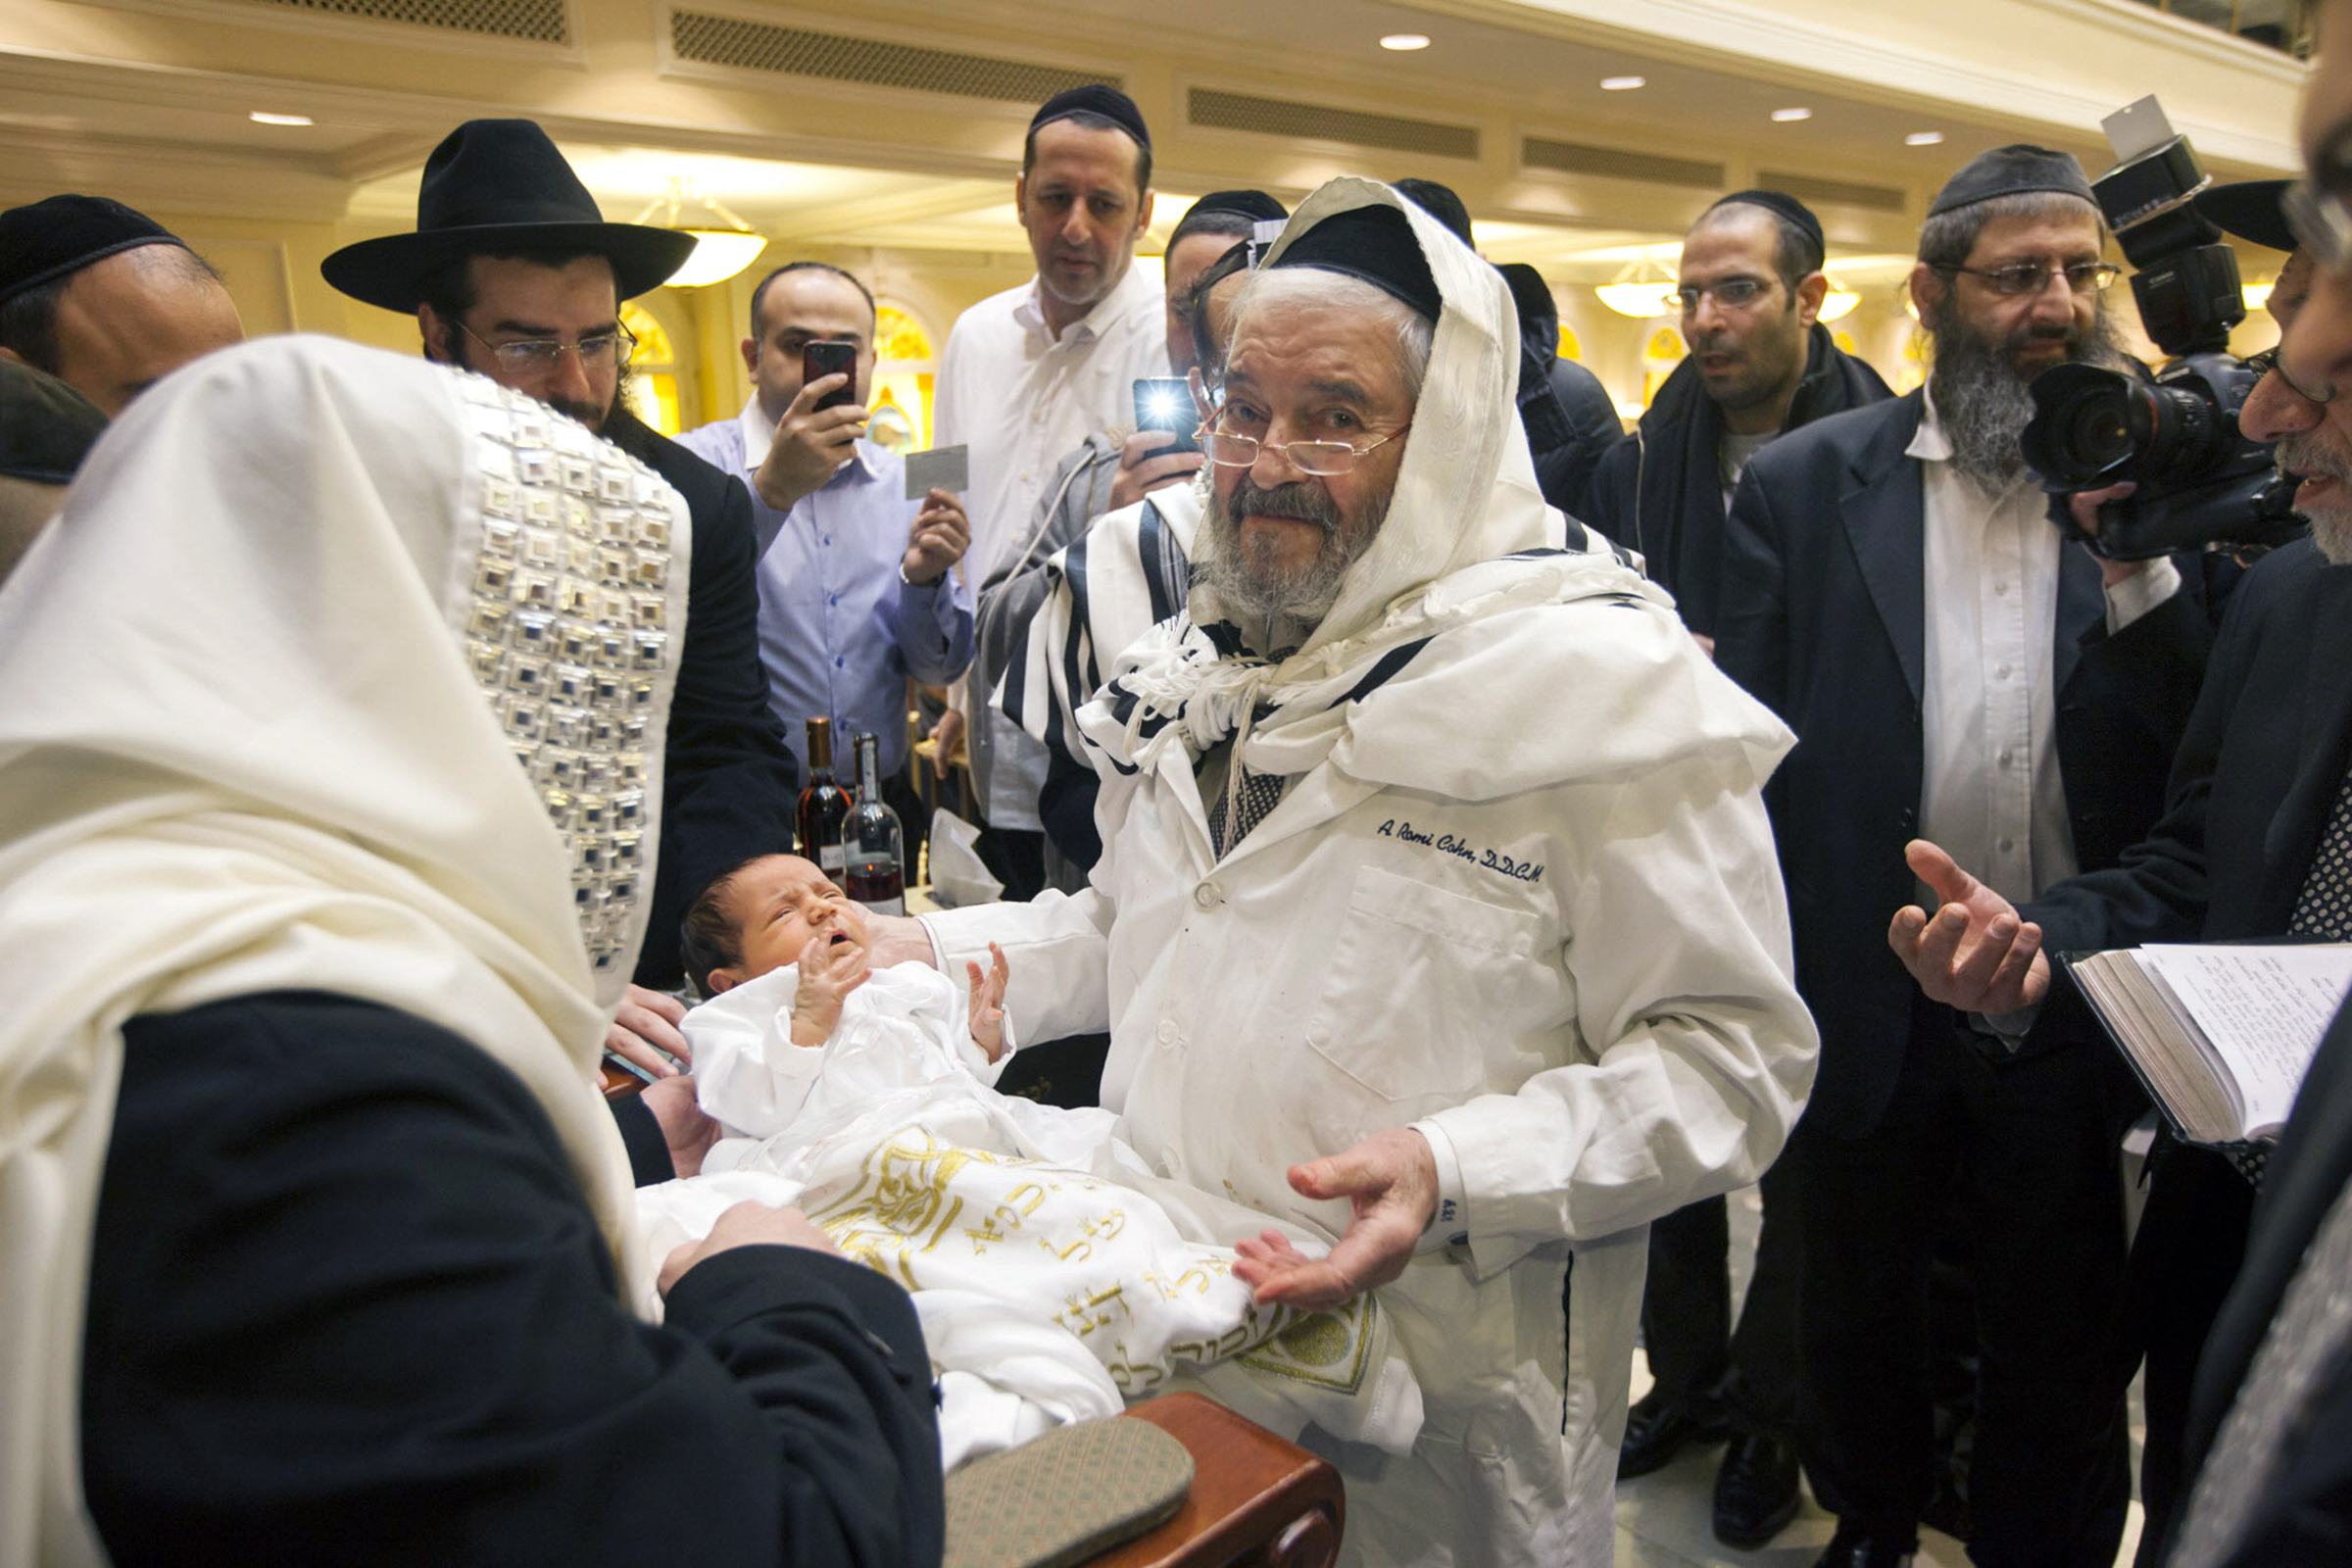 Romi Cohn, born Avraham Hakohen Cohn, performs a circumcision at Congregation Ahaba Ve Ahva in Brooklyn in 2014. (Michael Nagle/The New York Times)